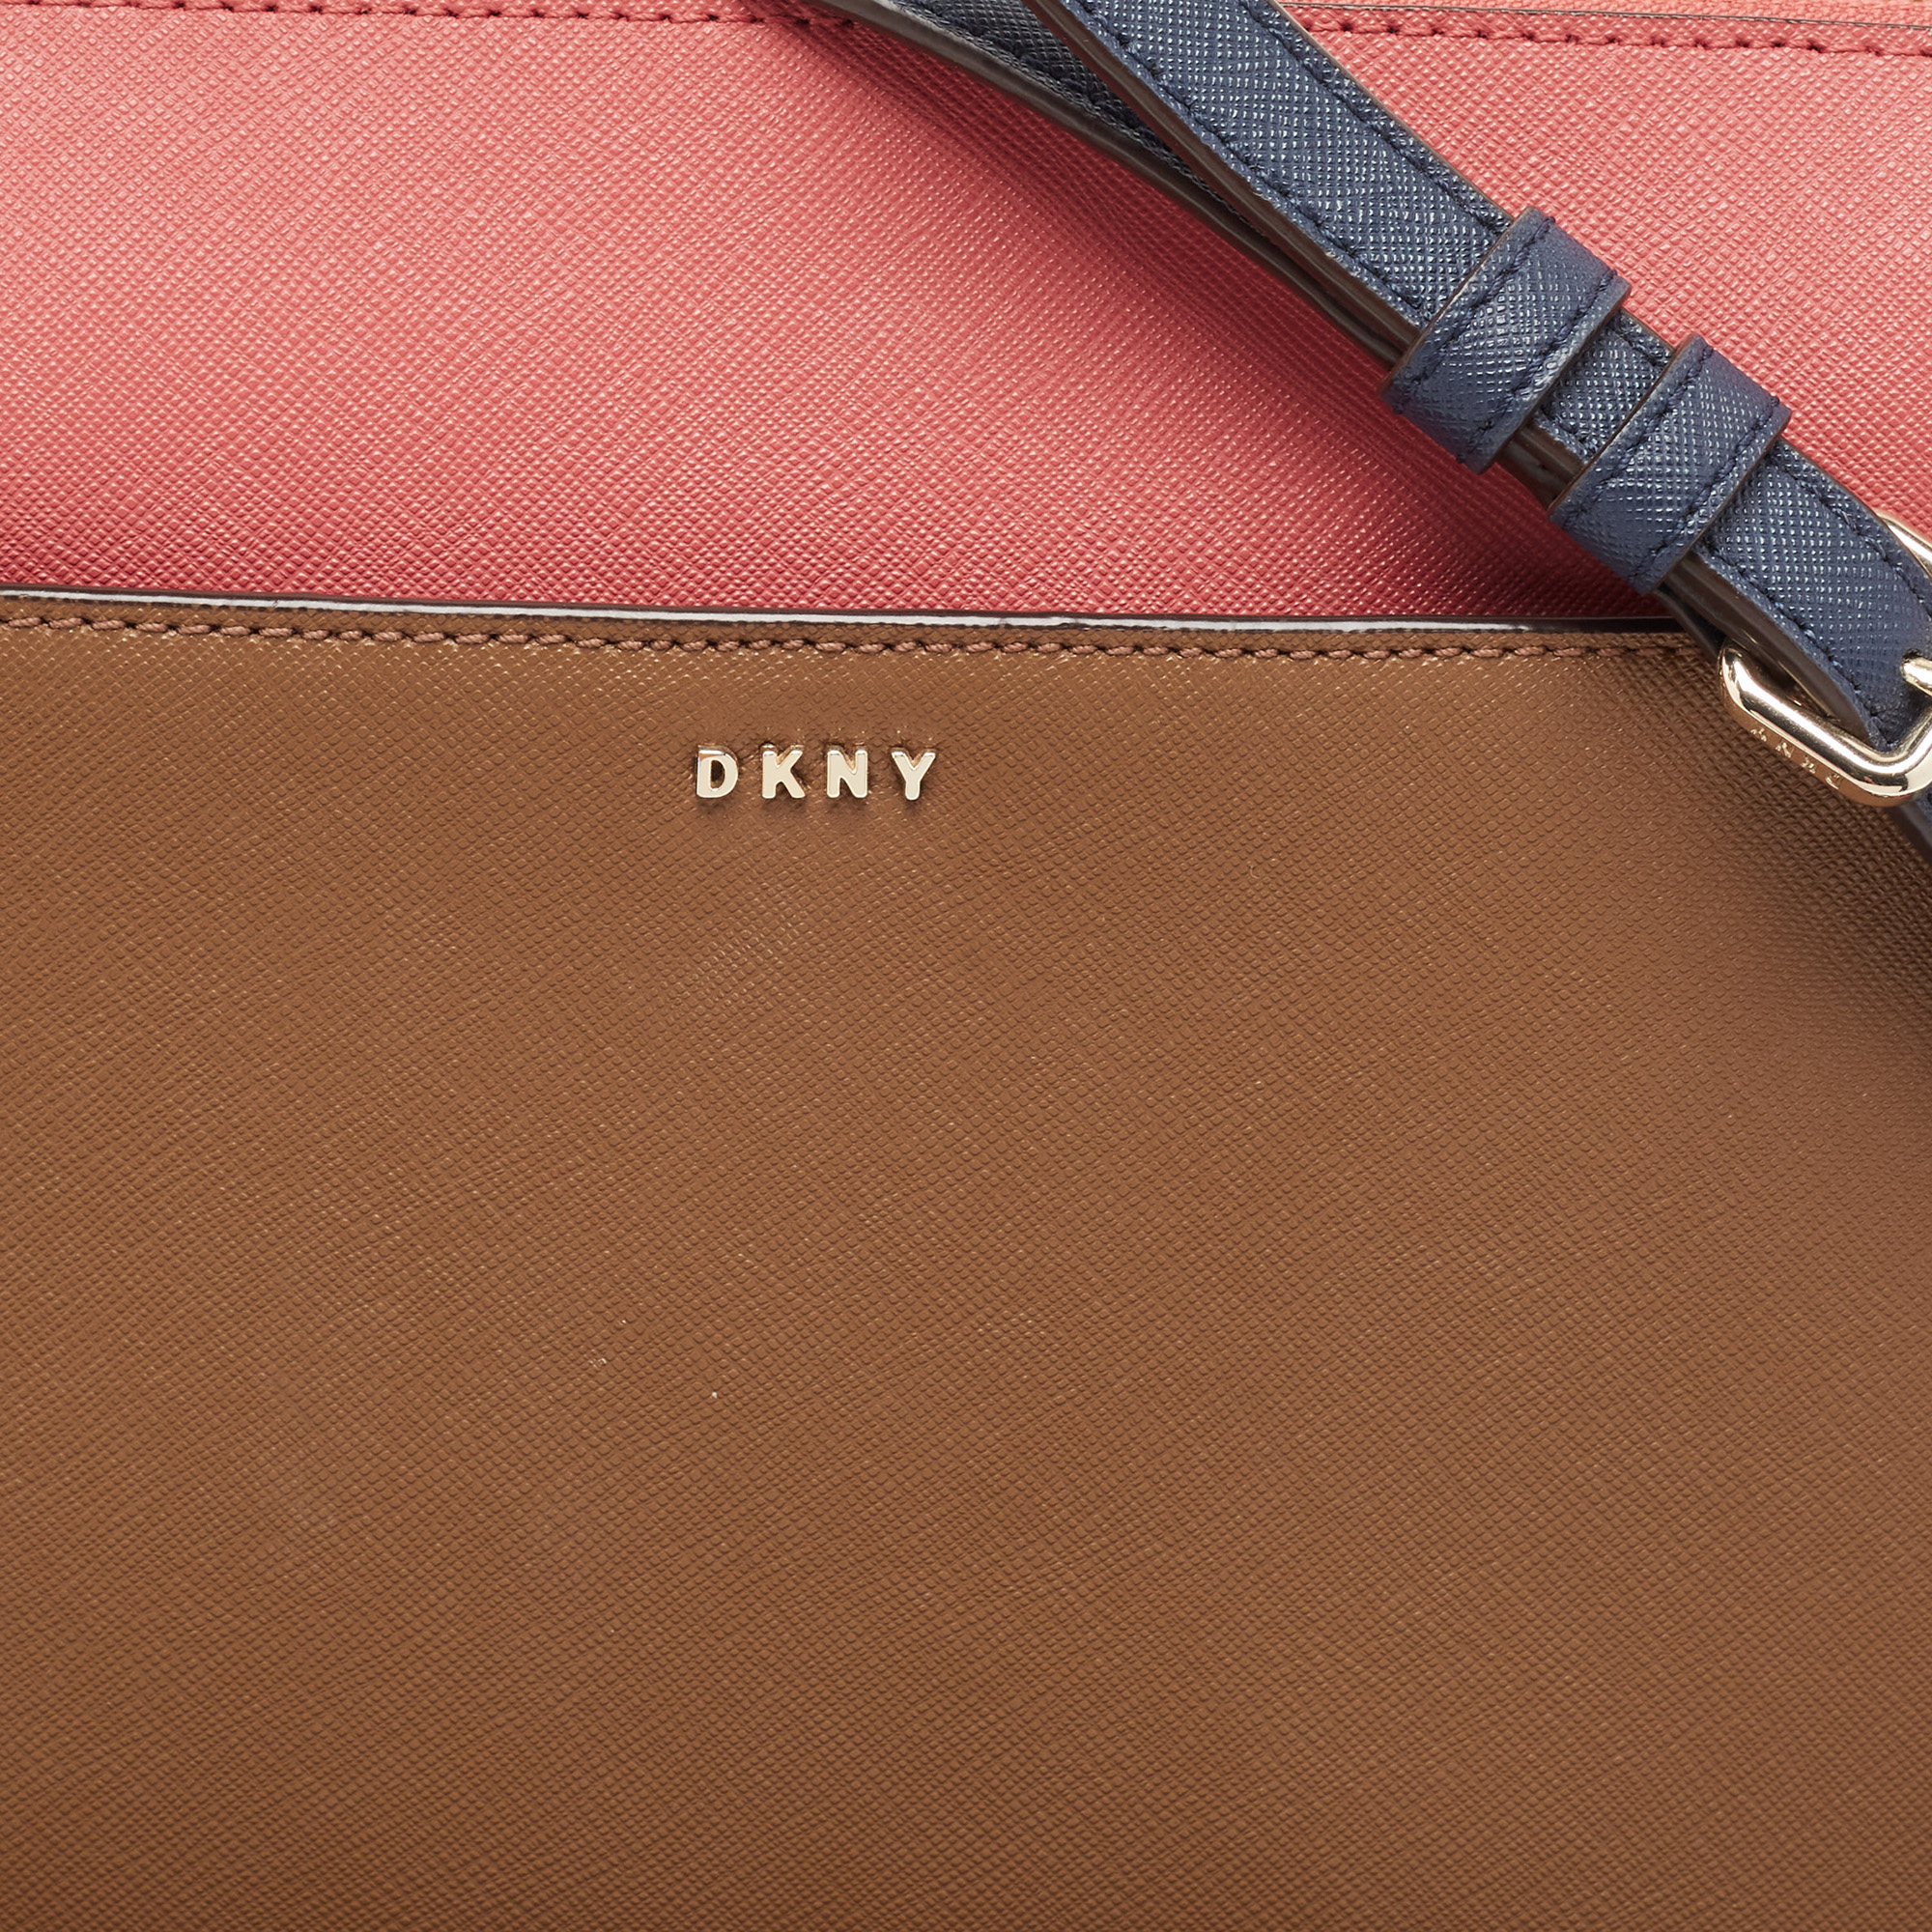 DKNY Tricolor Leather Ava Zip Crossbody Bag